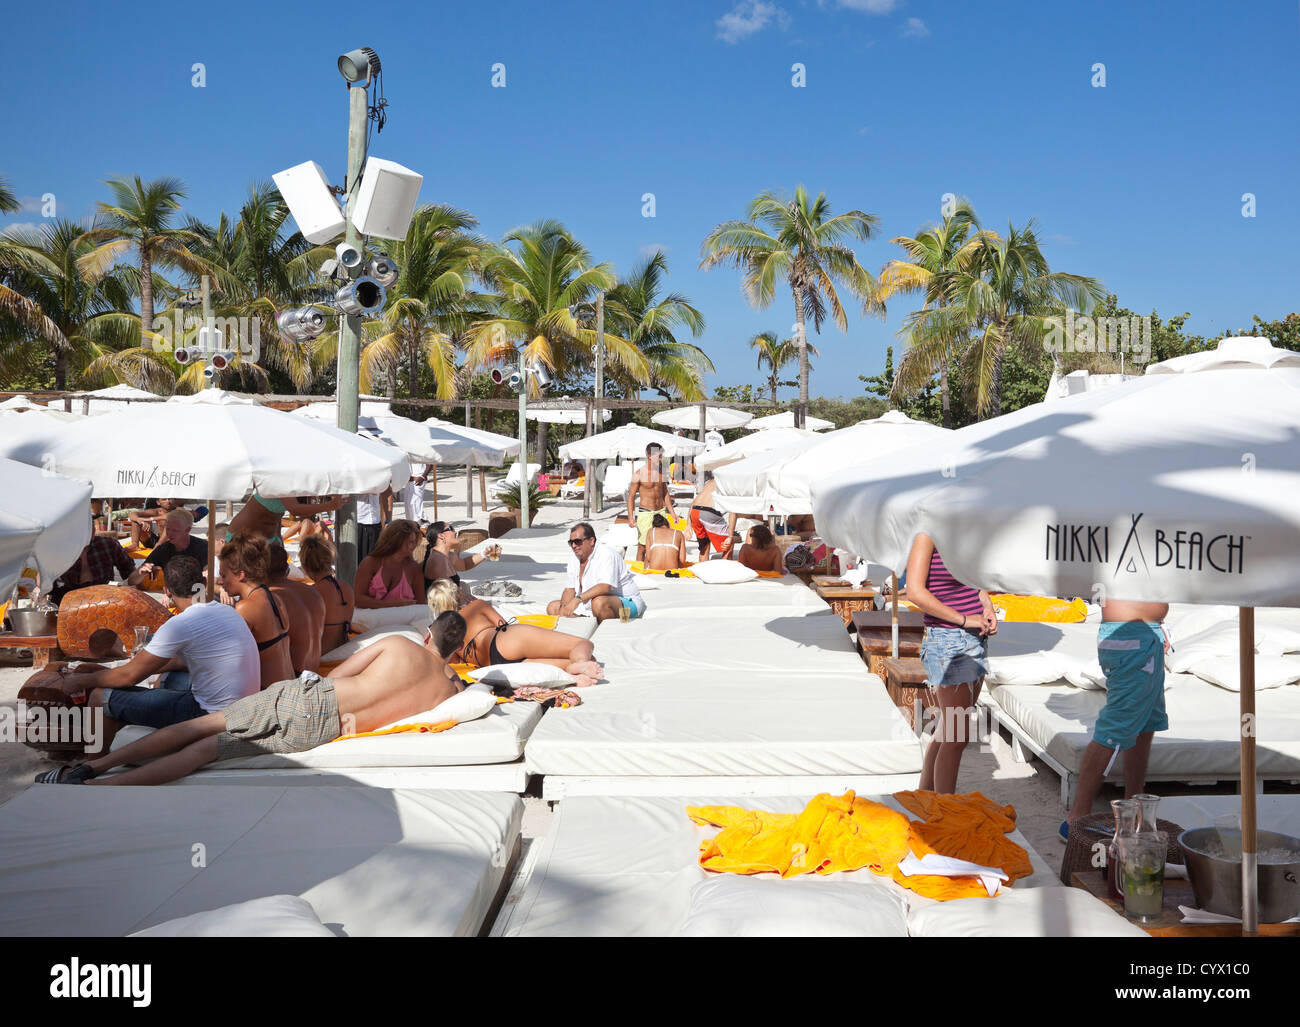 Nikki Beach outdoor lounging area, South Beach, Miami, Florida, USA. Stock Photo